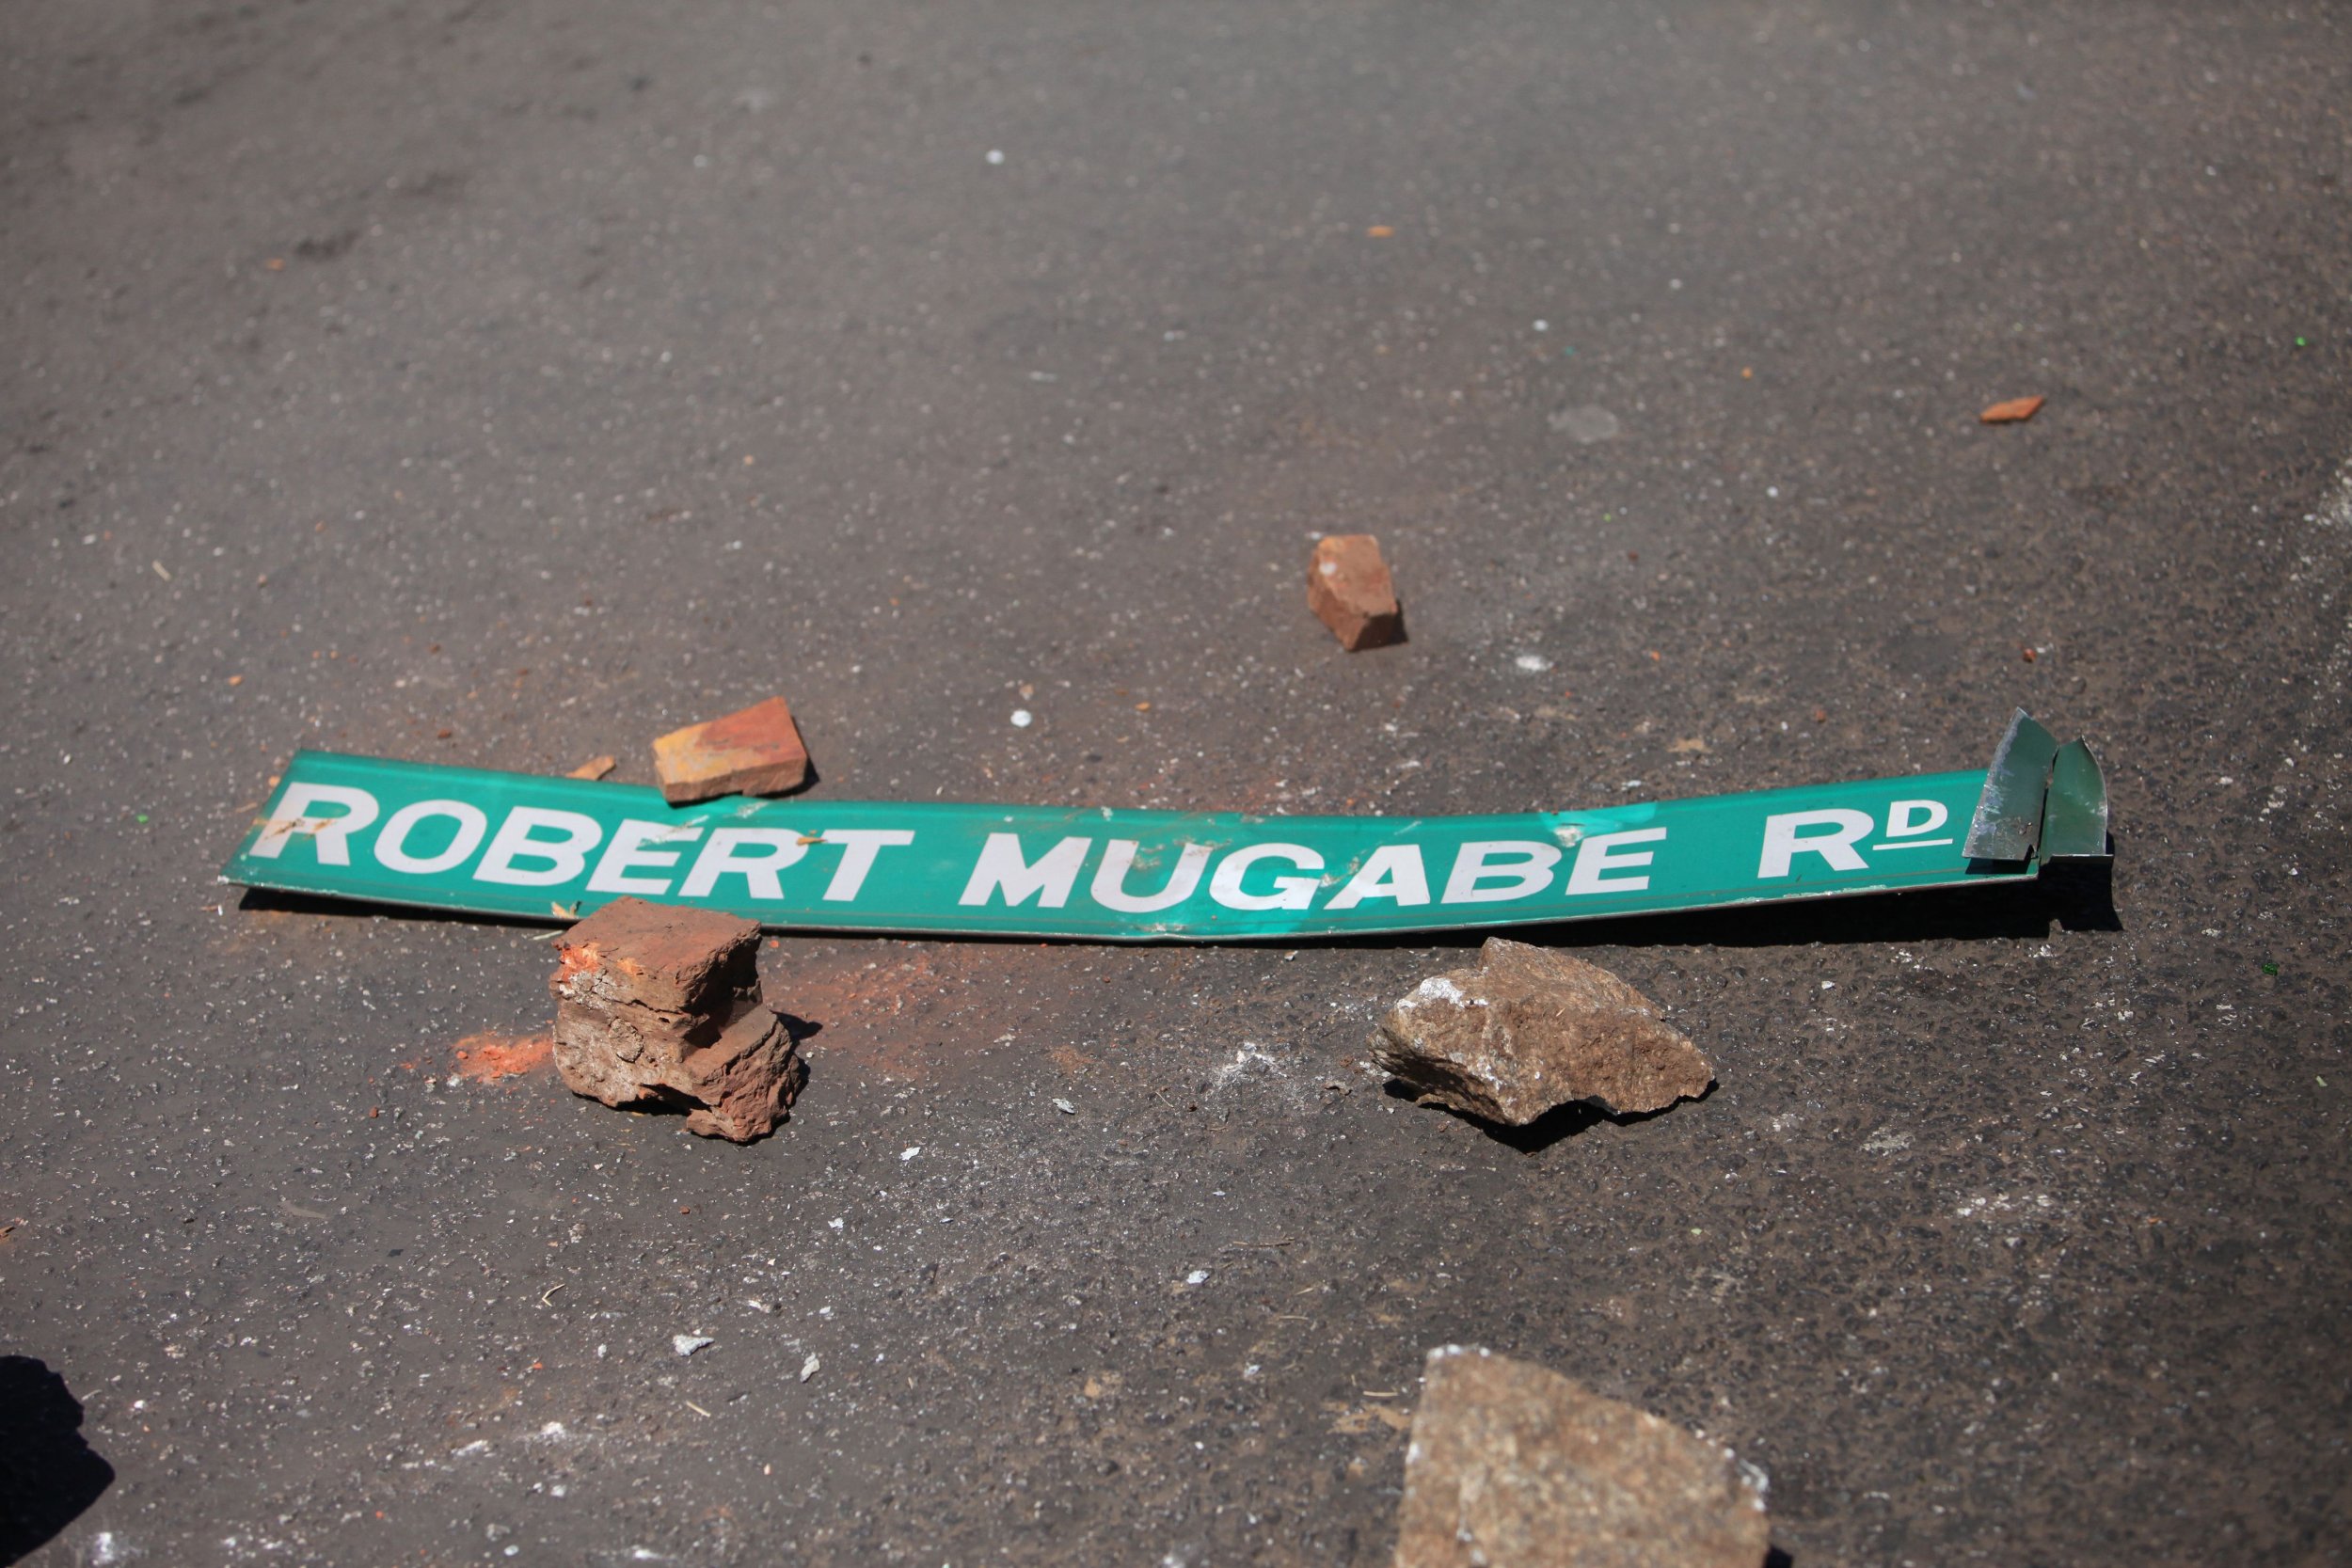 Robert Mugabe road sign